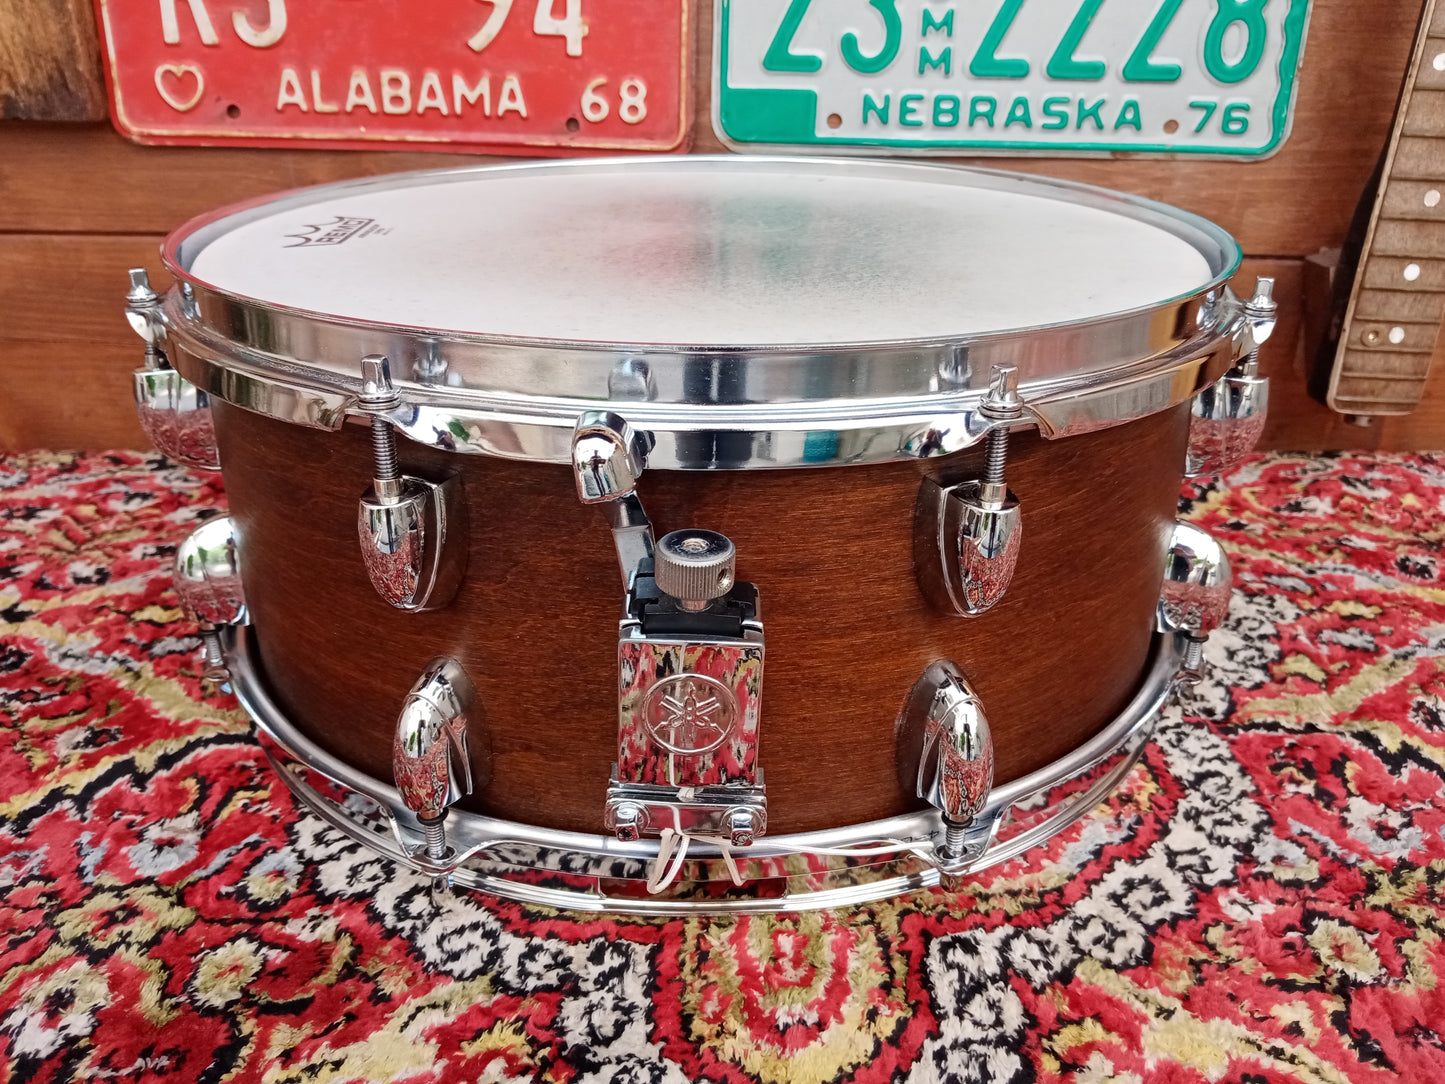 YAMAHA VSD1460VB, used snare drum.